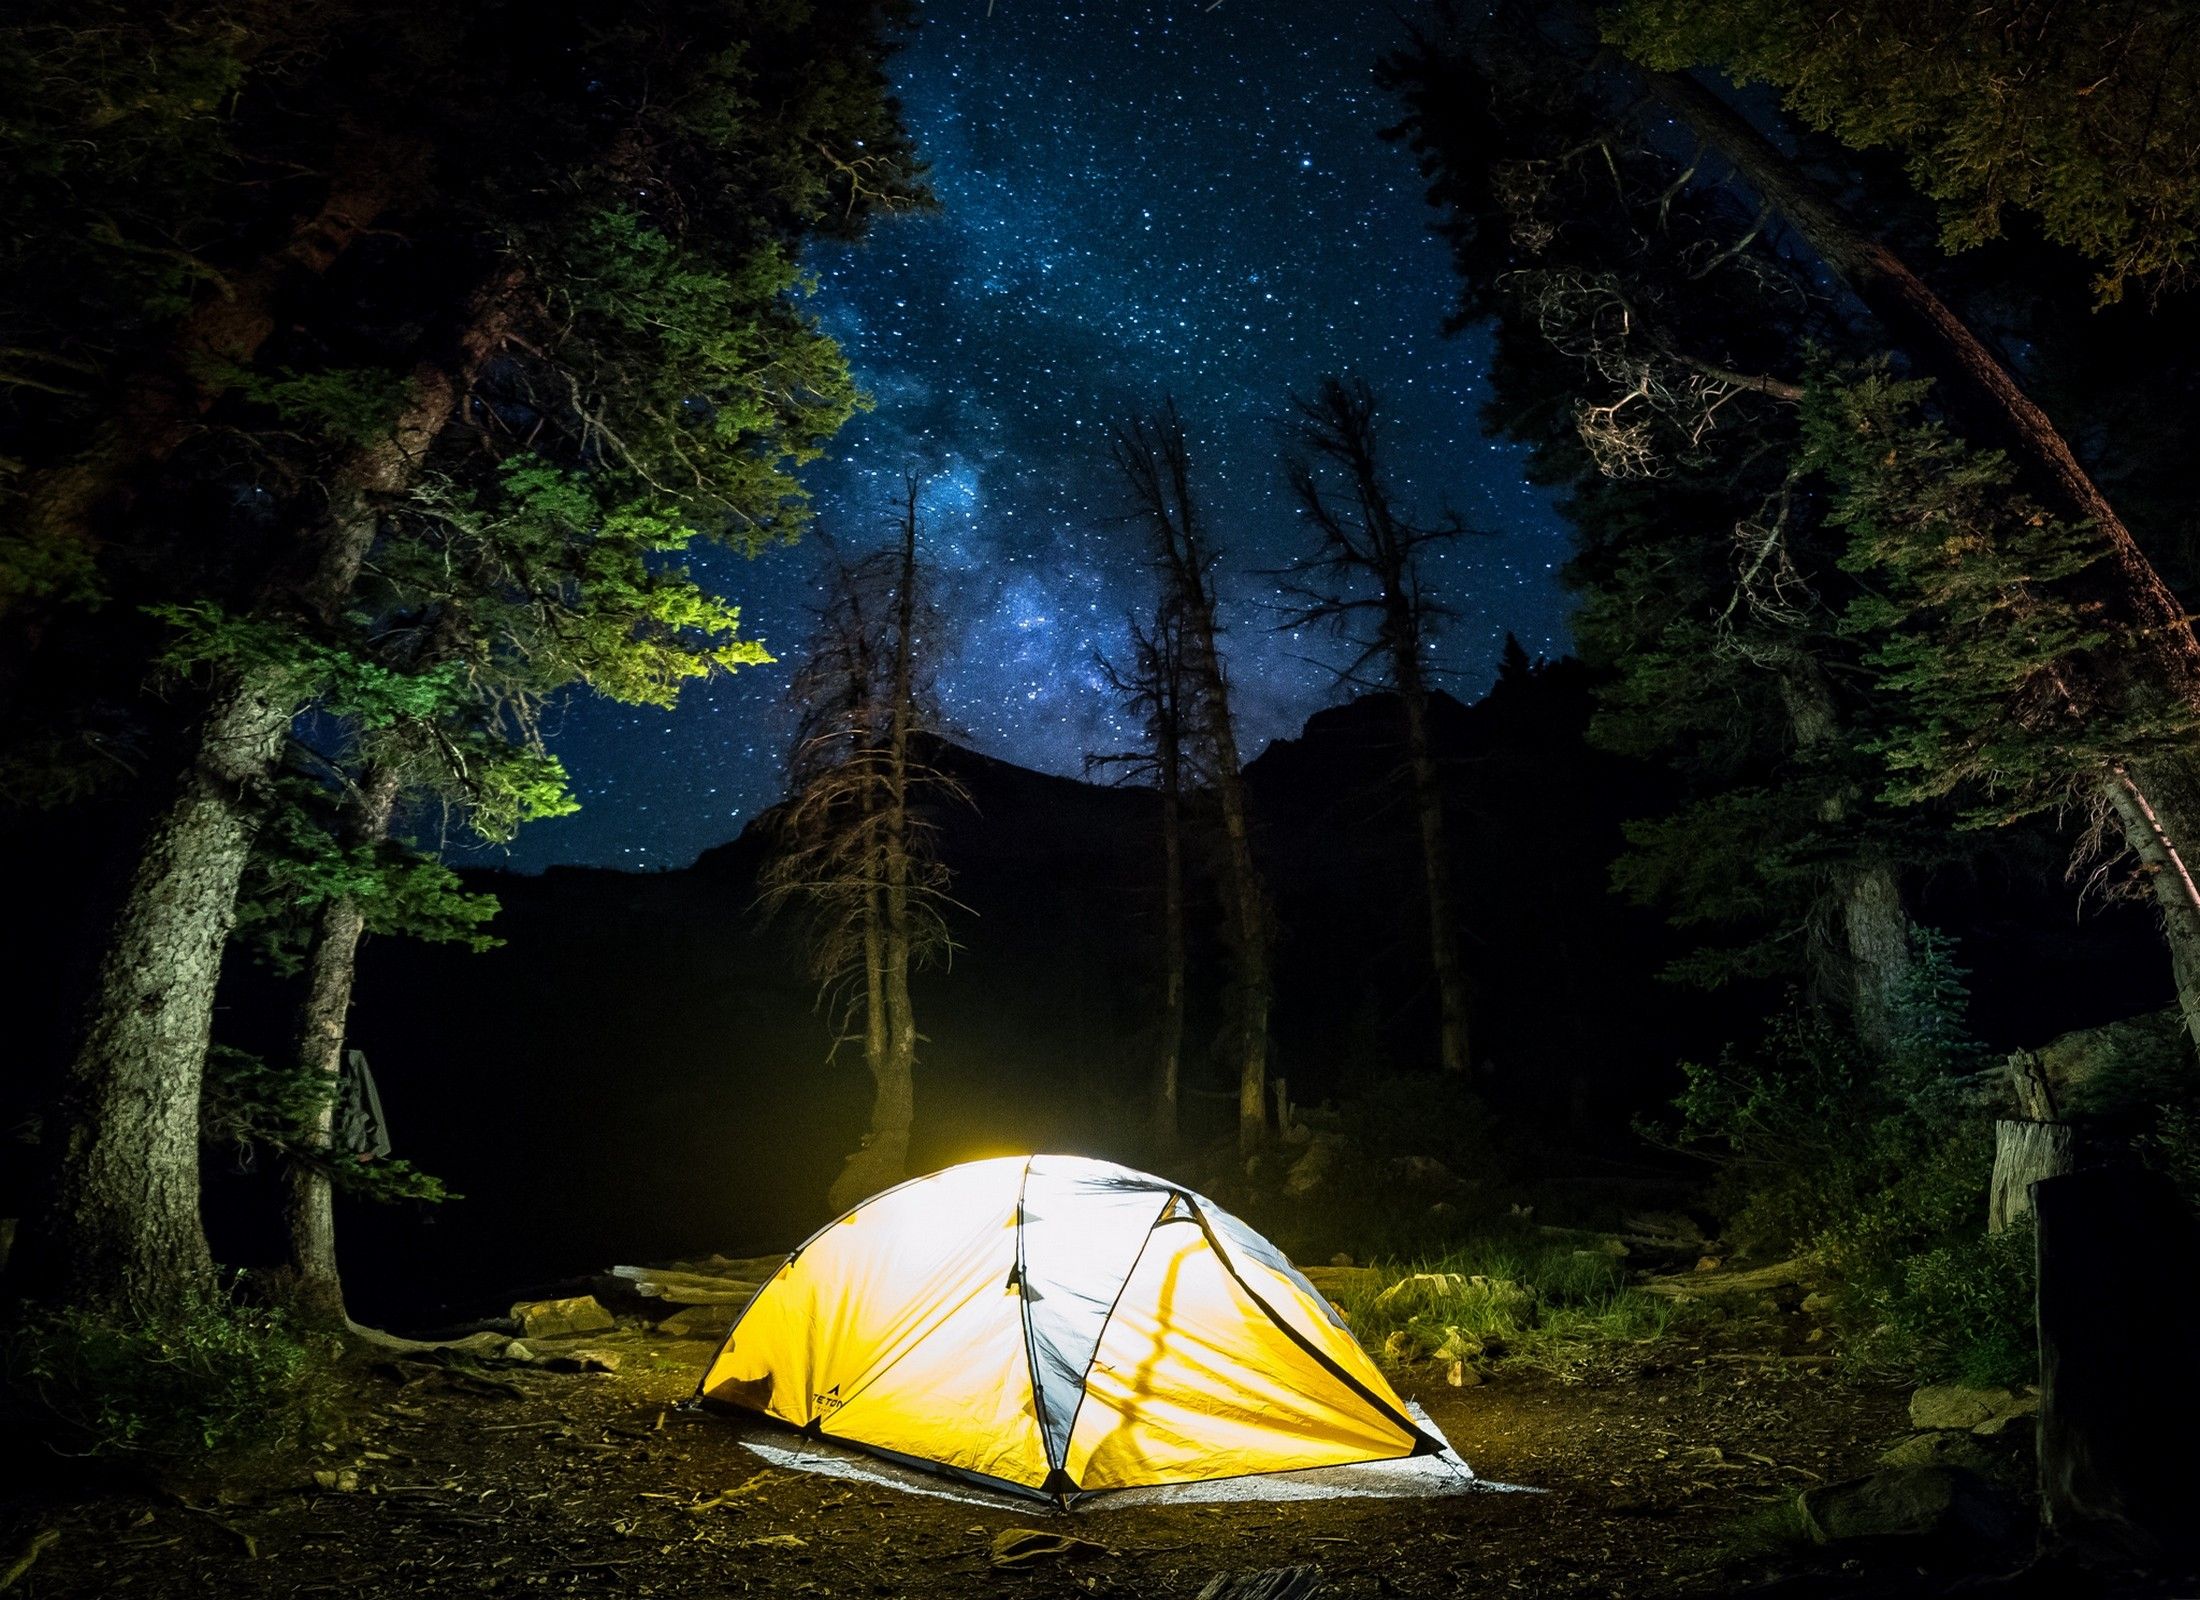 Dan Adventurer On Camping Under The Stars